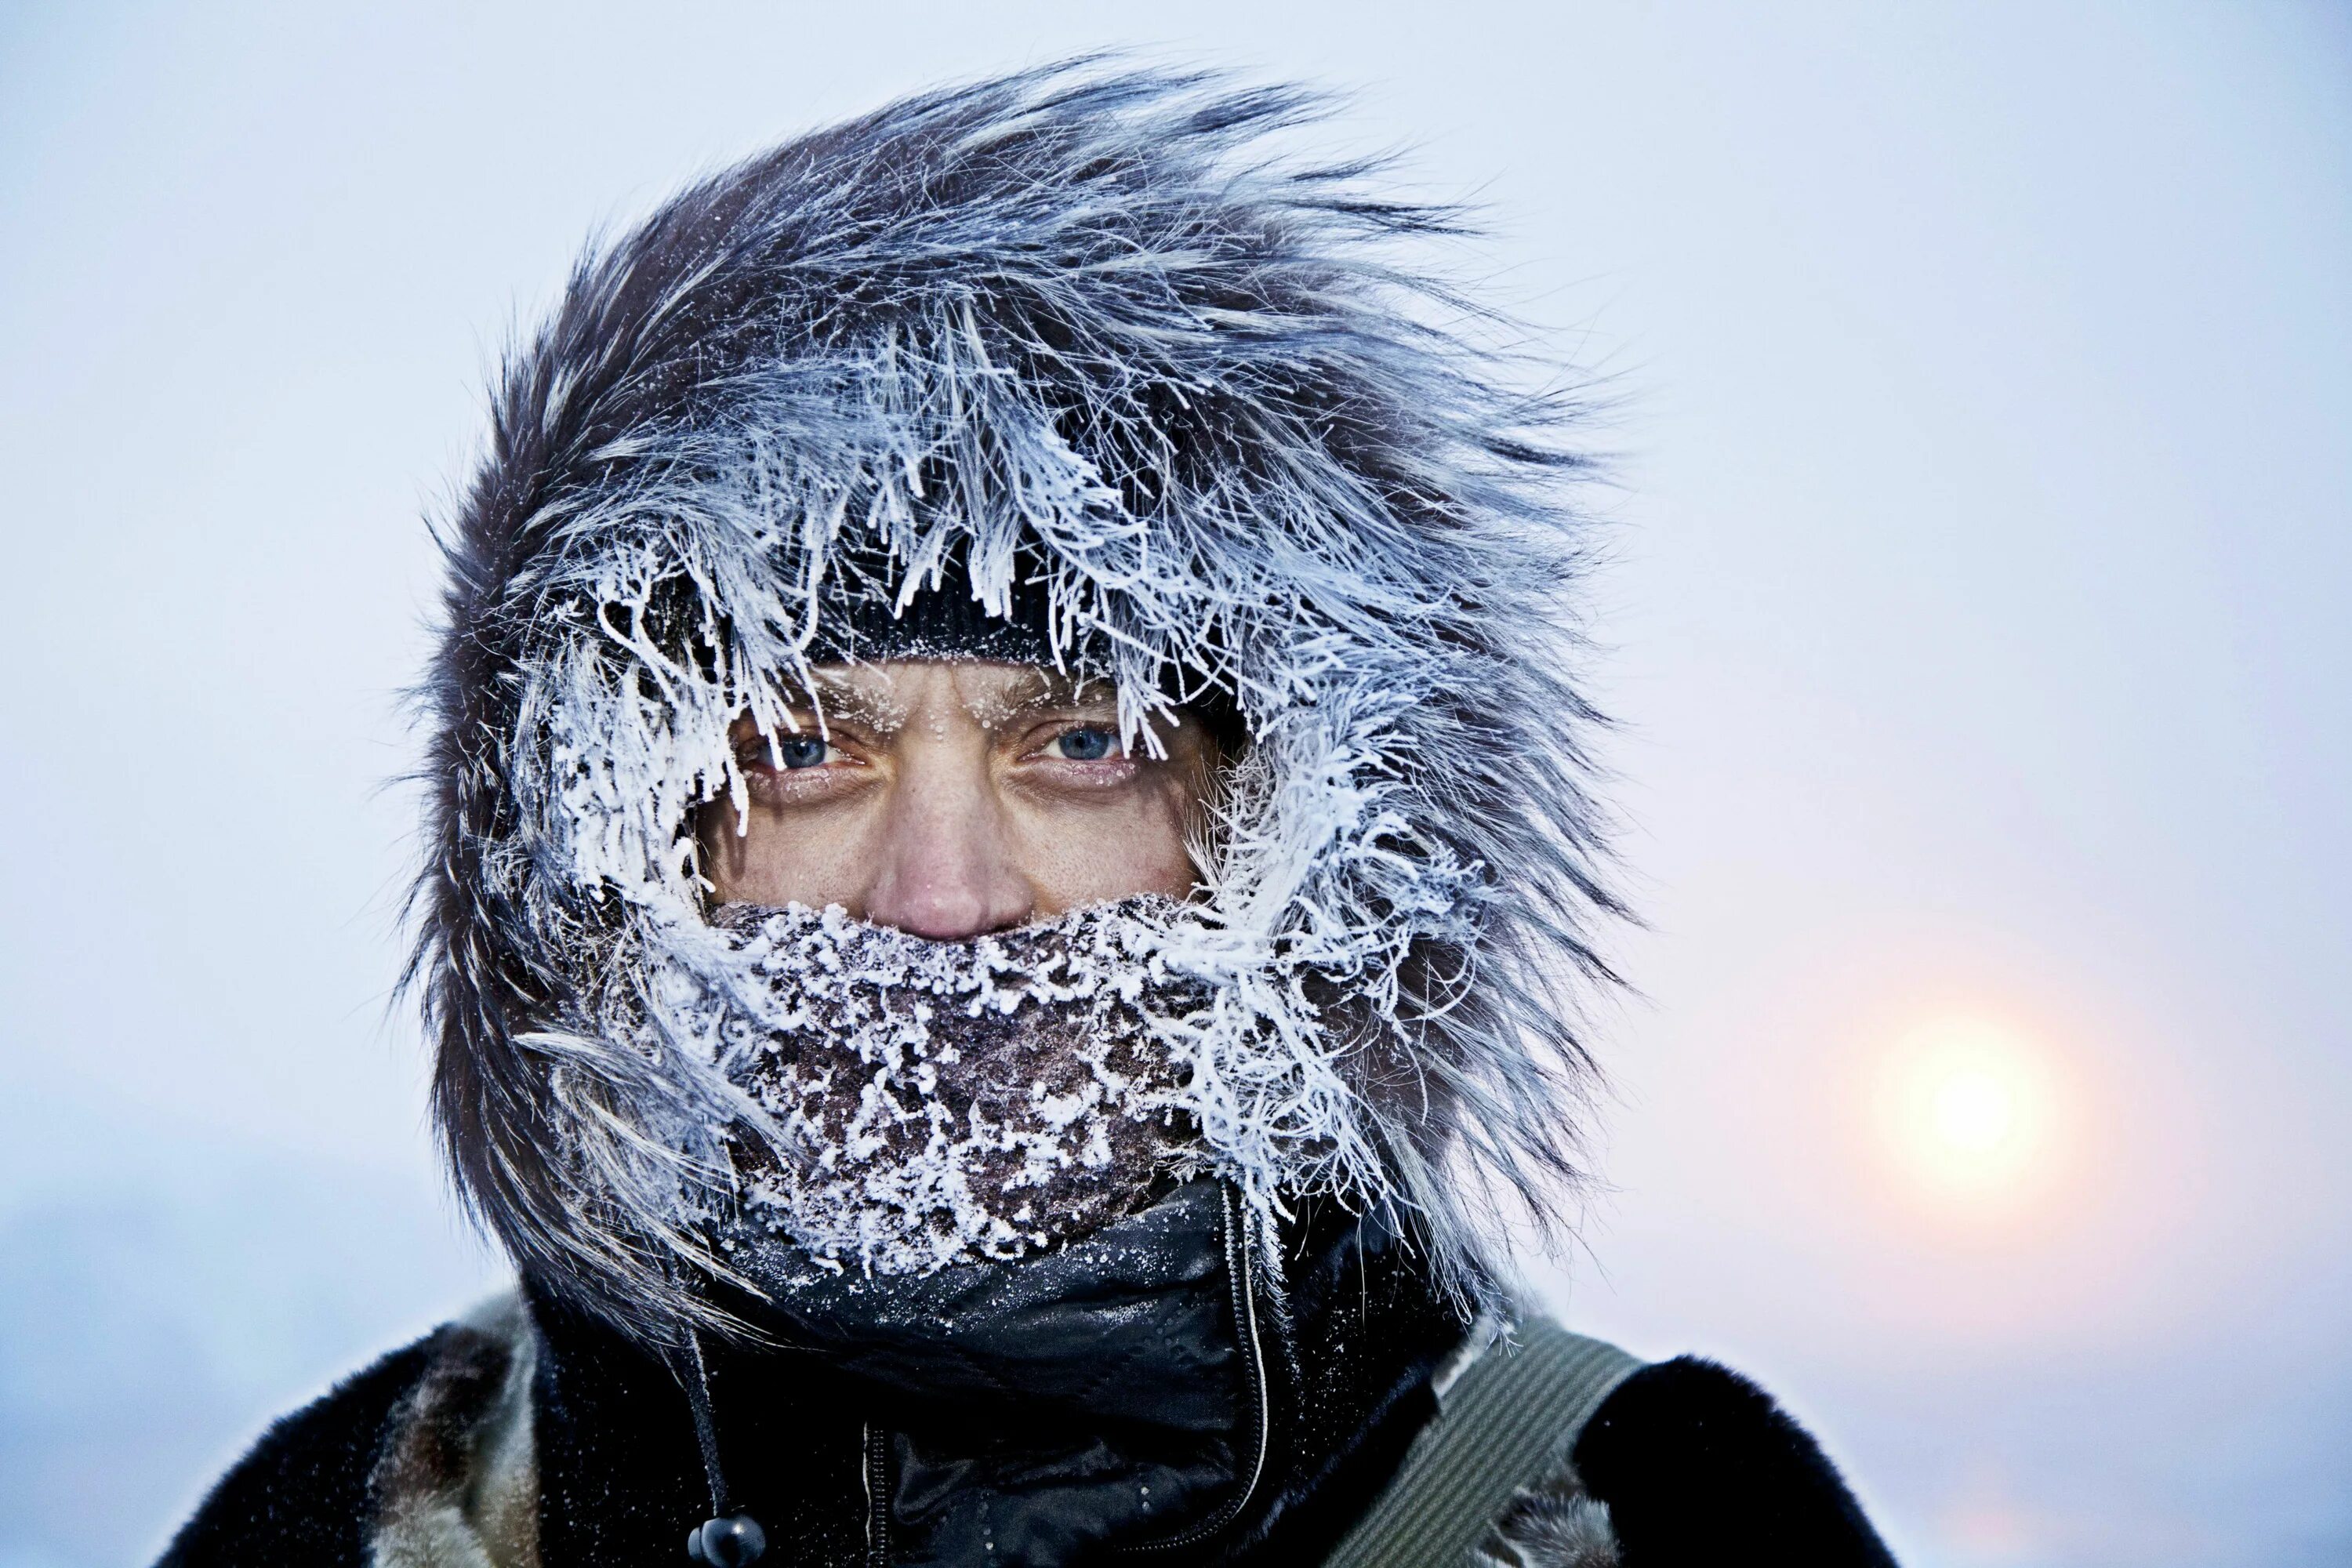 Russia winters are cold. Иней на лице. Люди зимой. Человек в снегу.